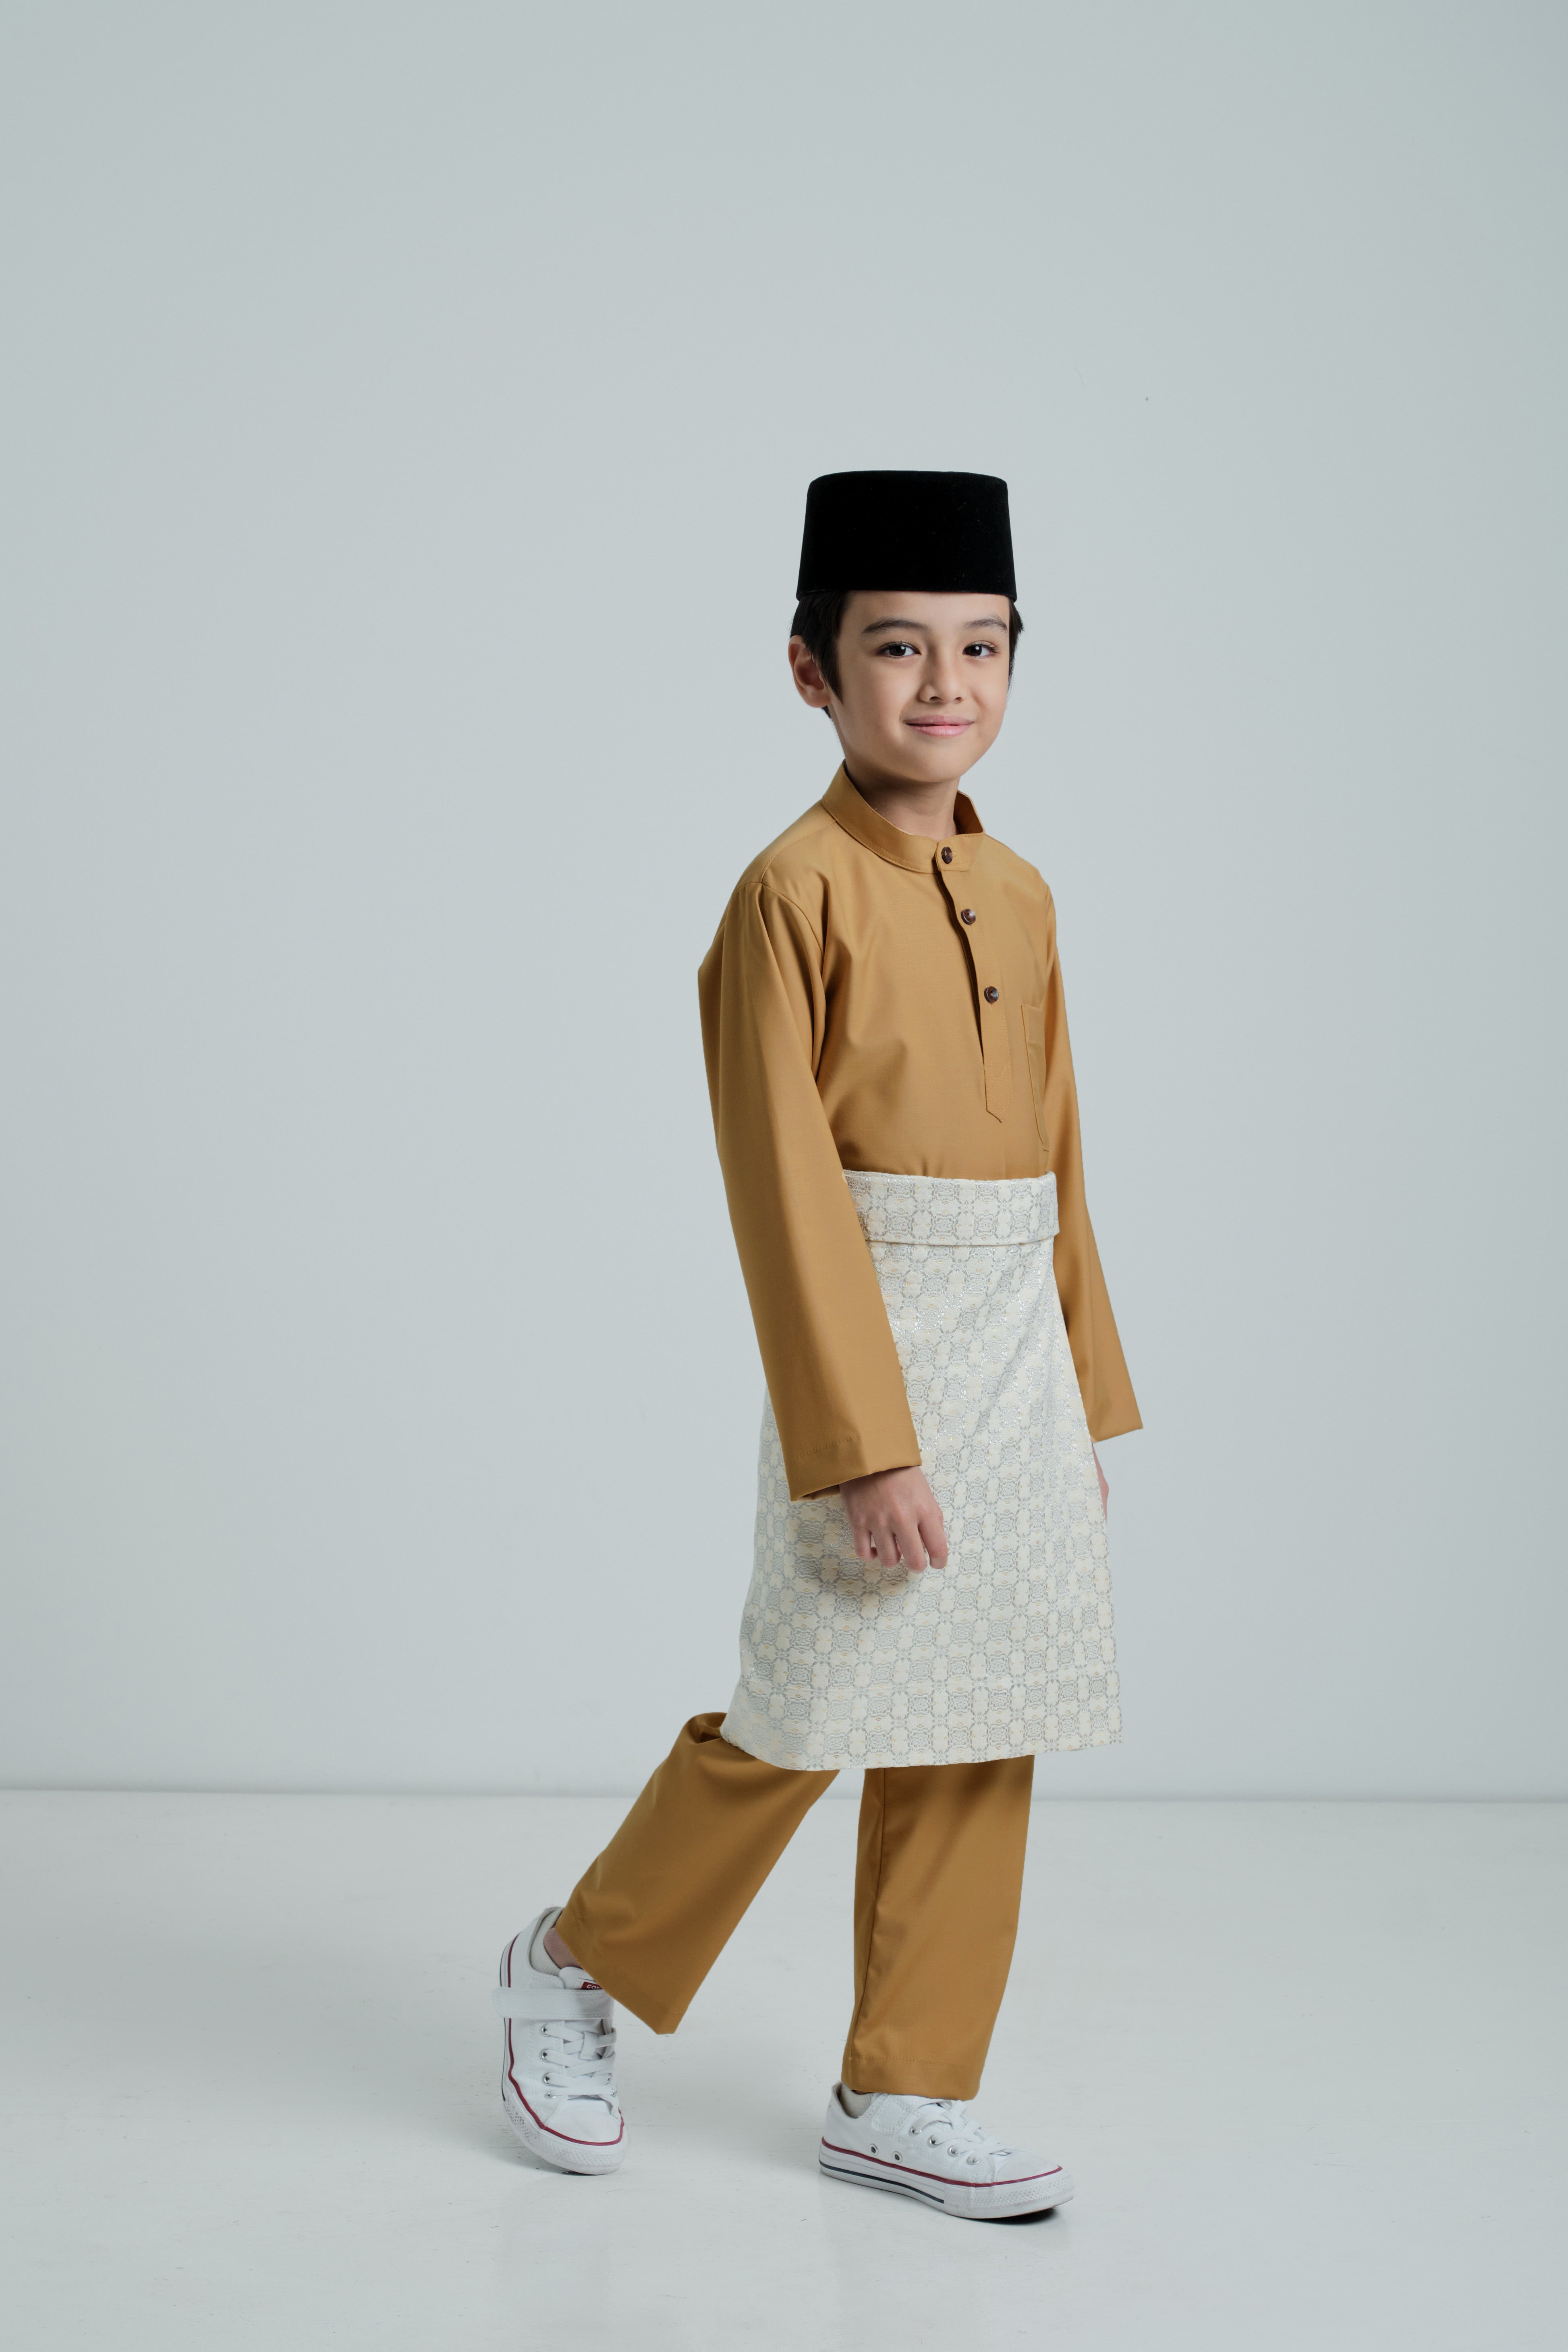 Patawali Boys Baju Melayu Cekak Musang - Mustard Brown